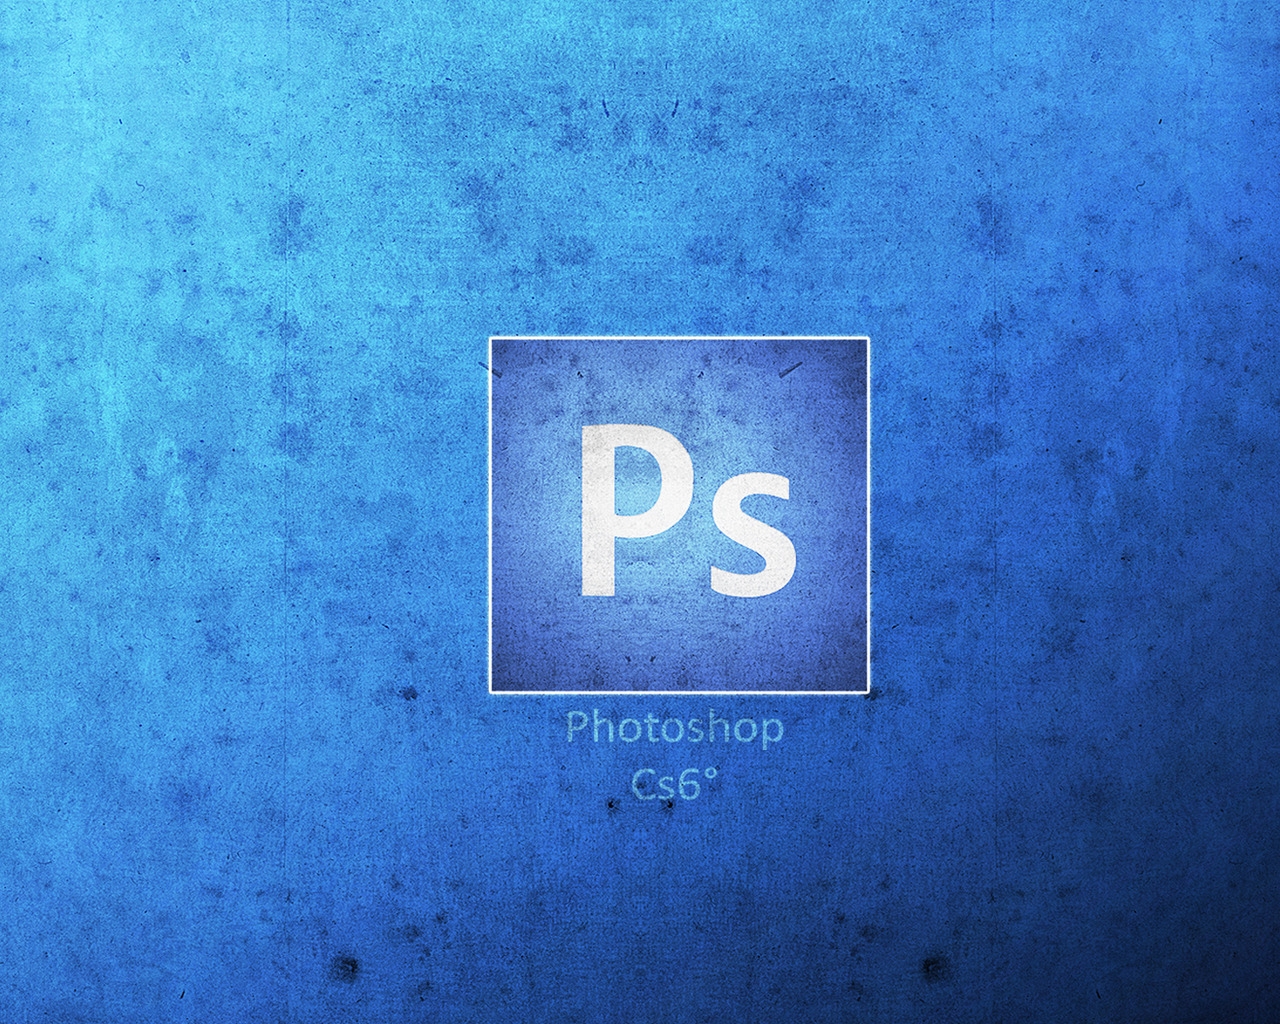 Photoshop CS6 Logo for 1280 x 1024 resolution